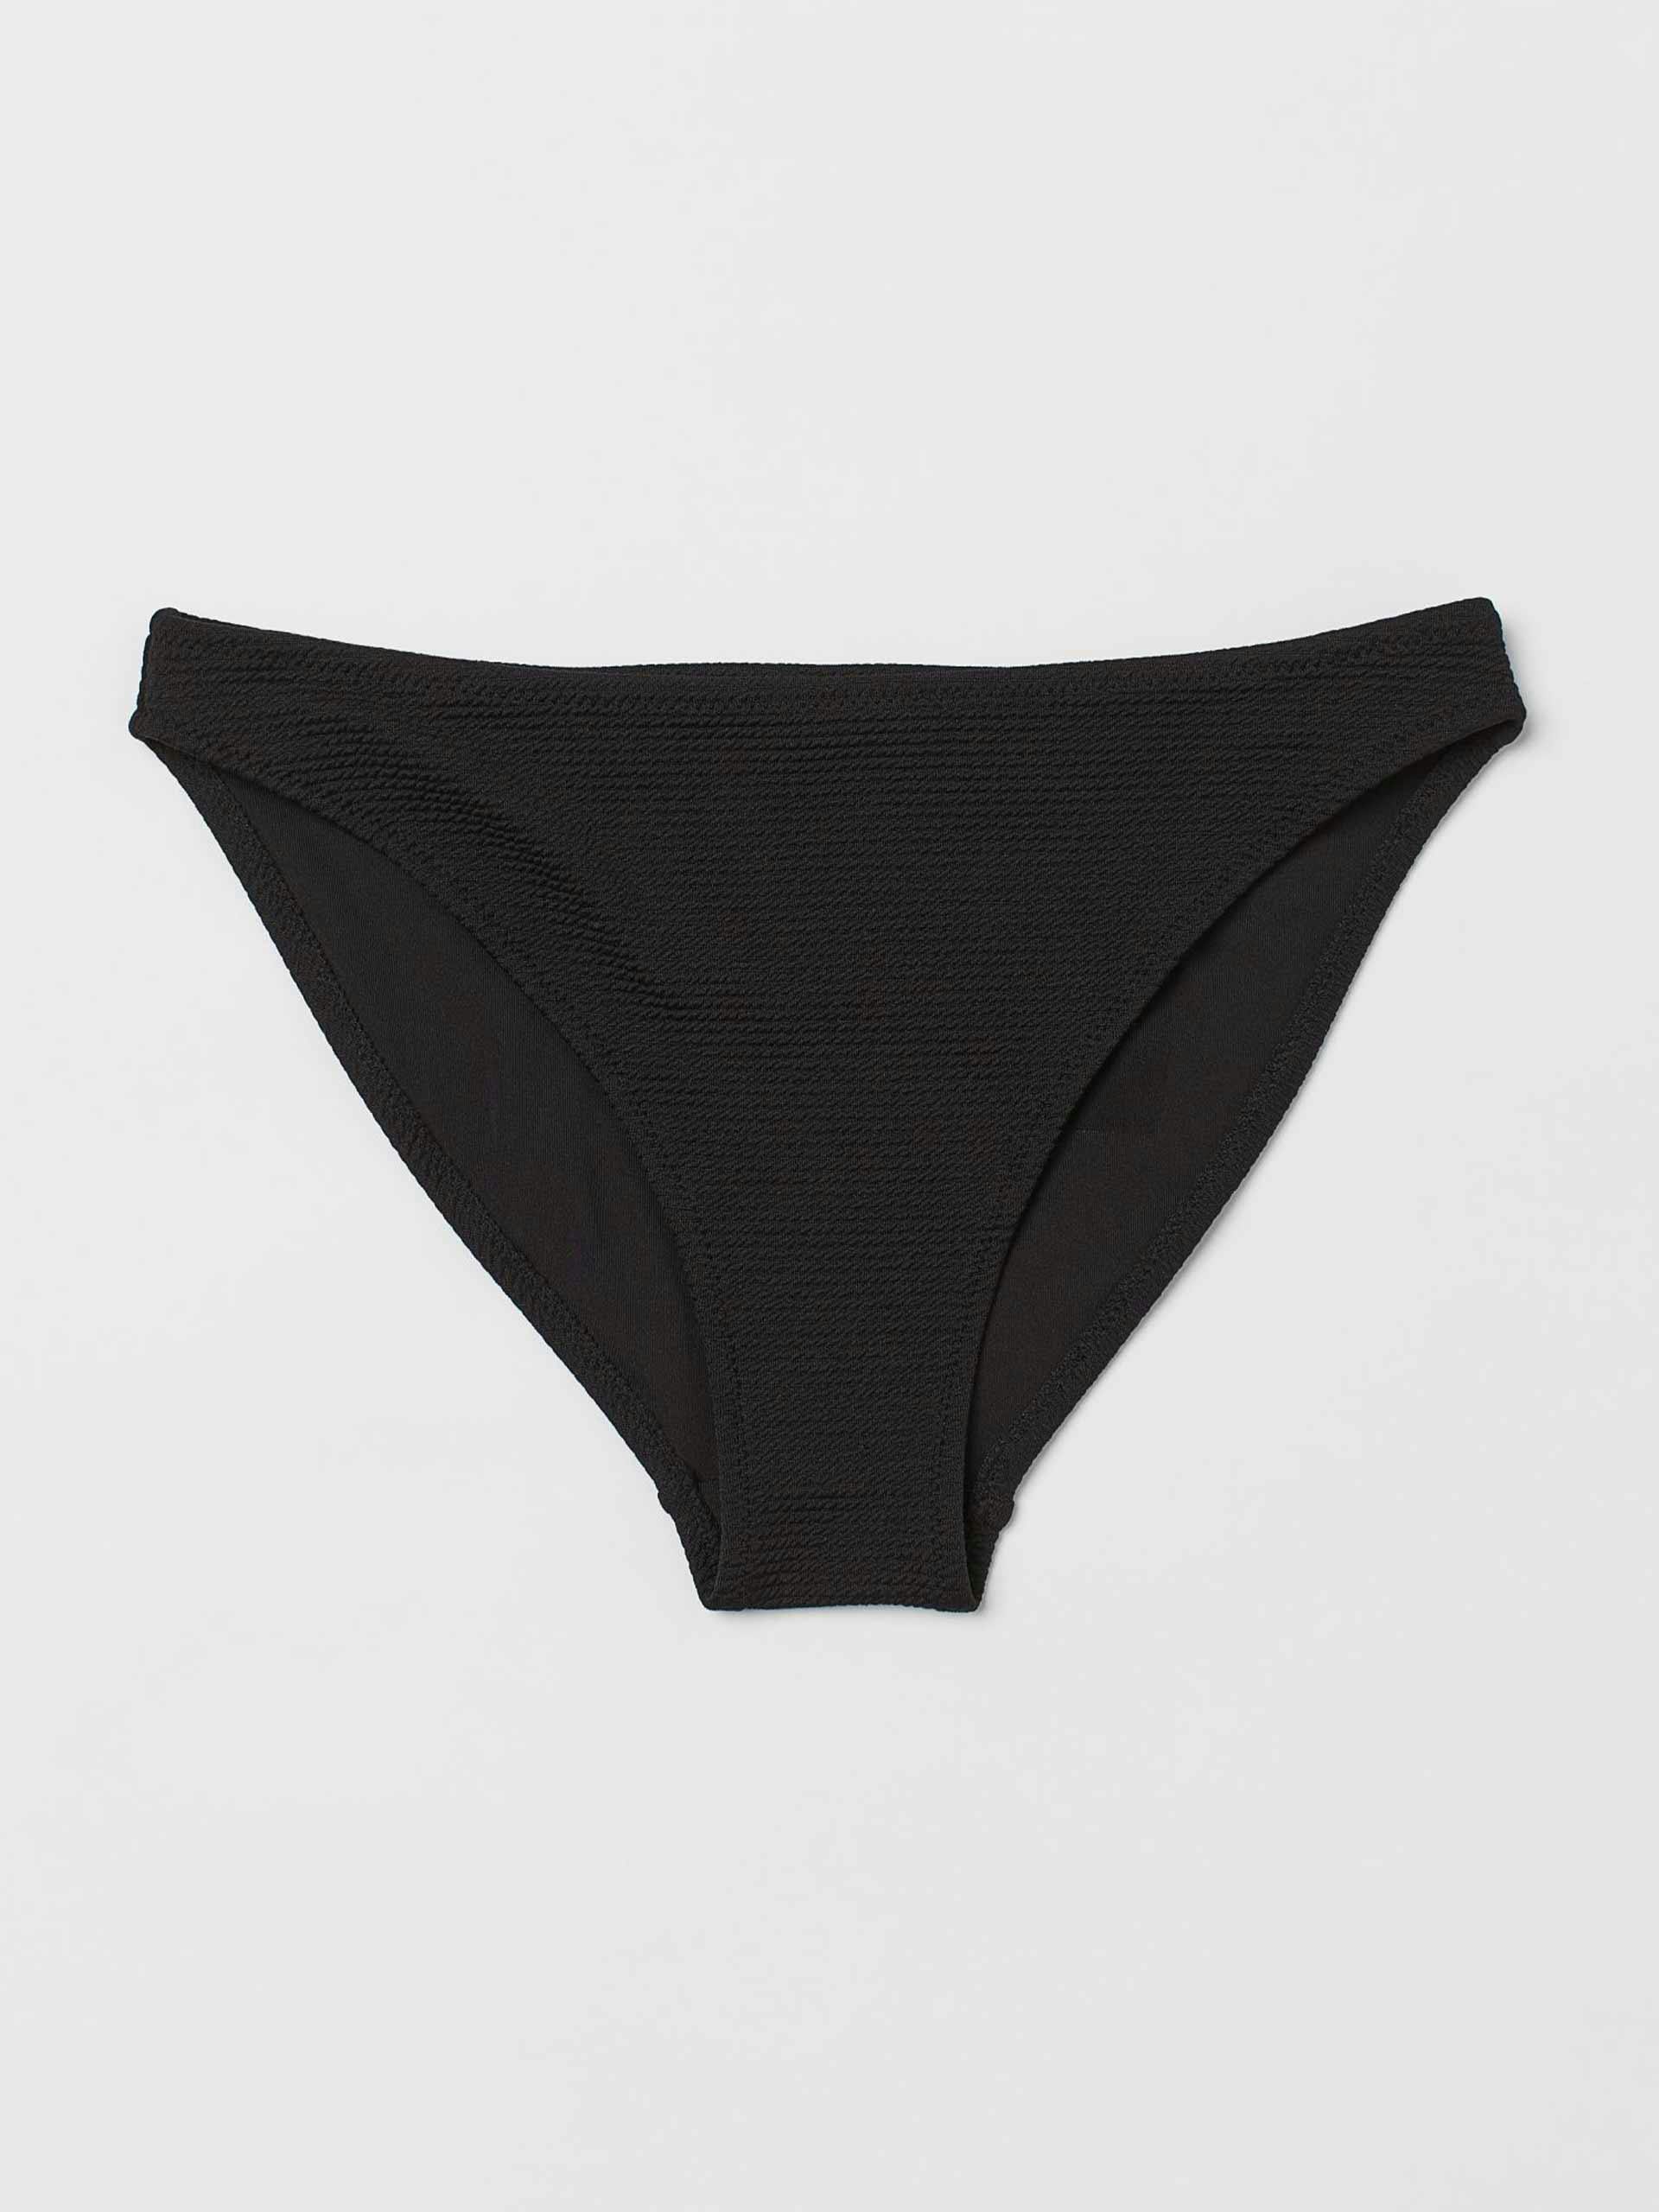 Black textured bikini bottoms